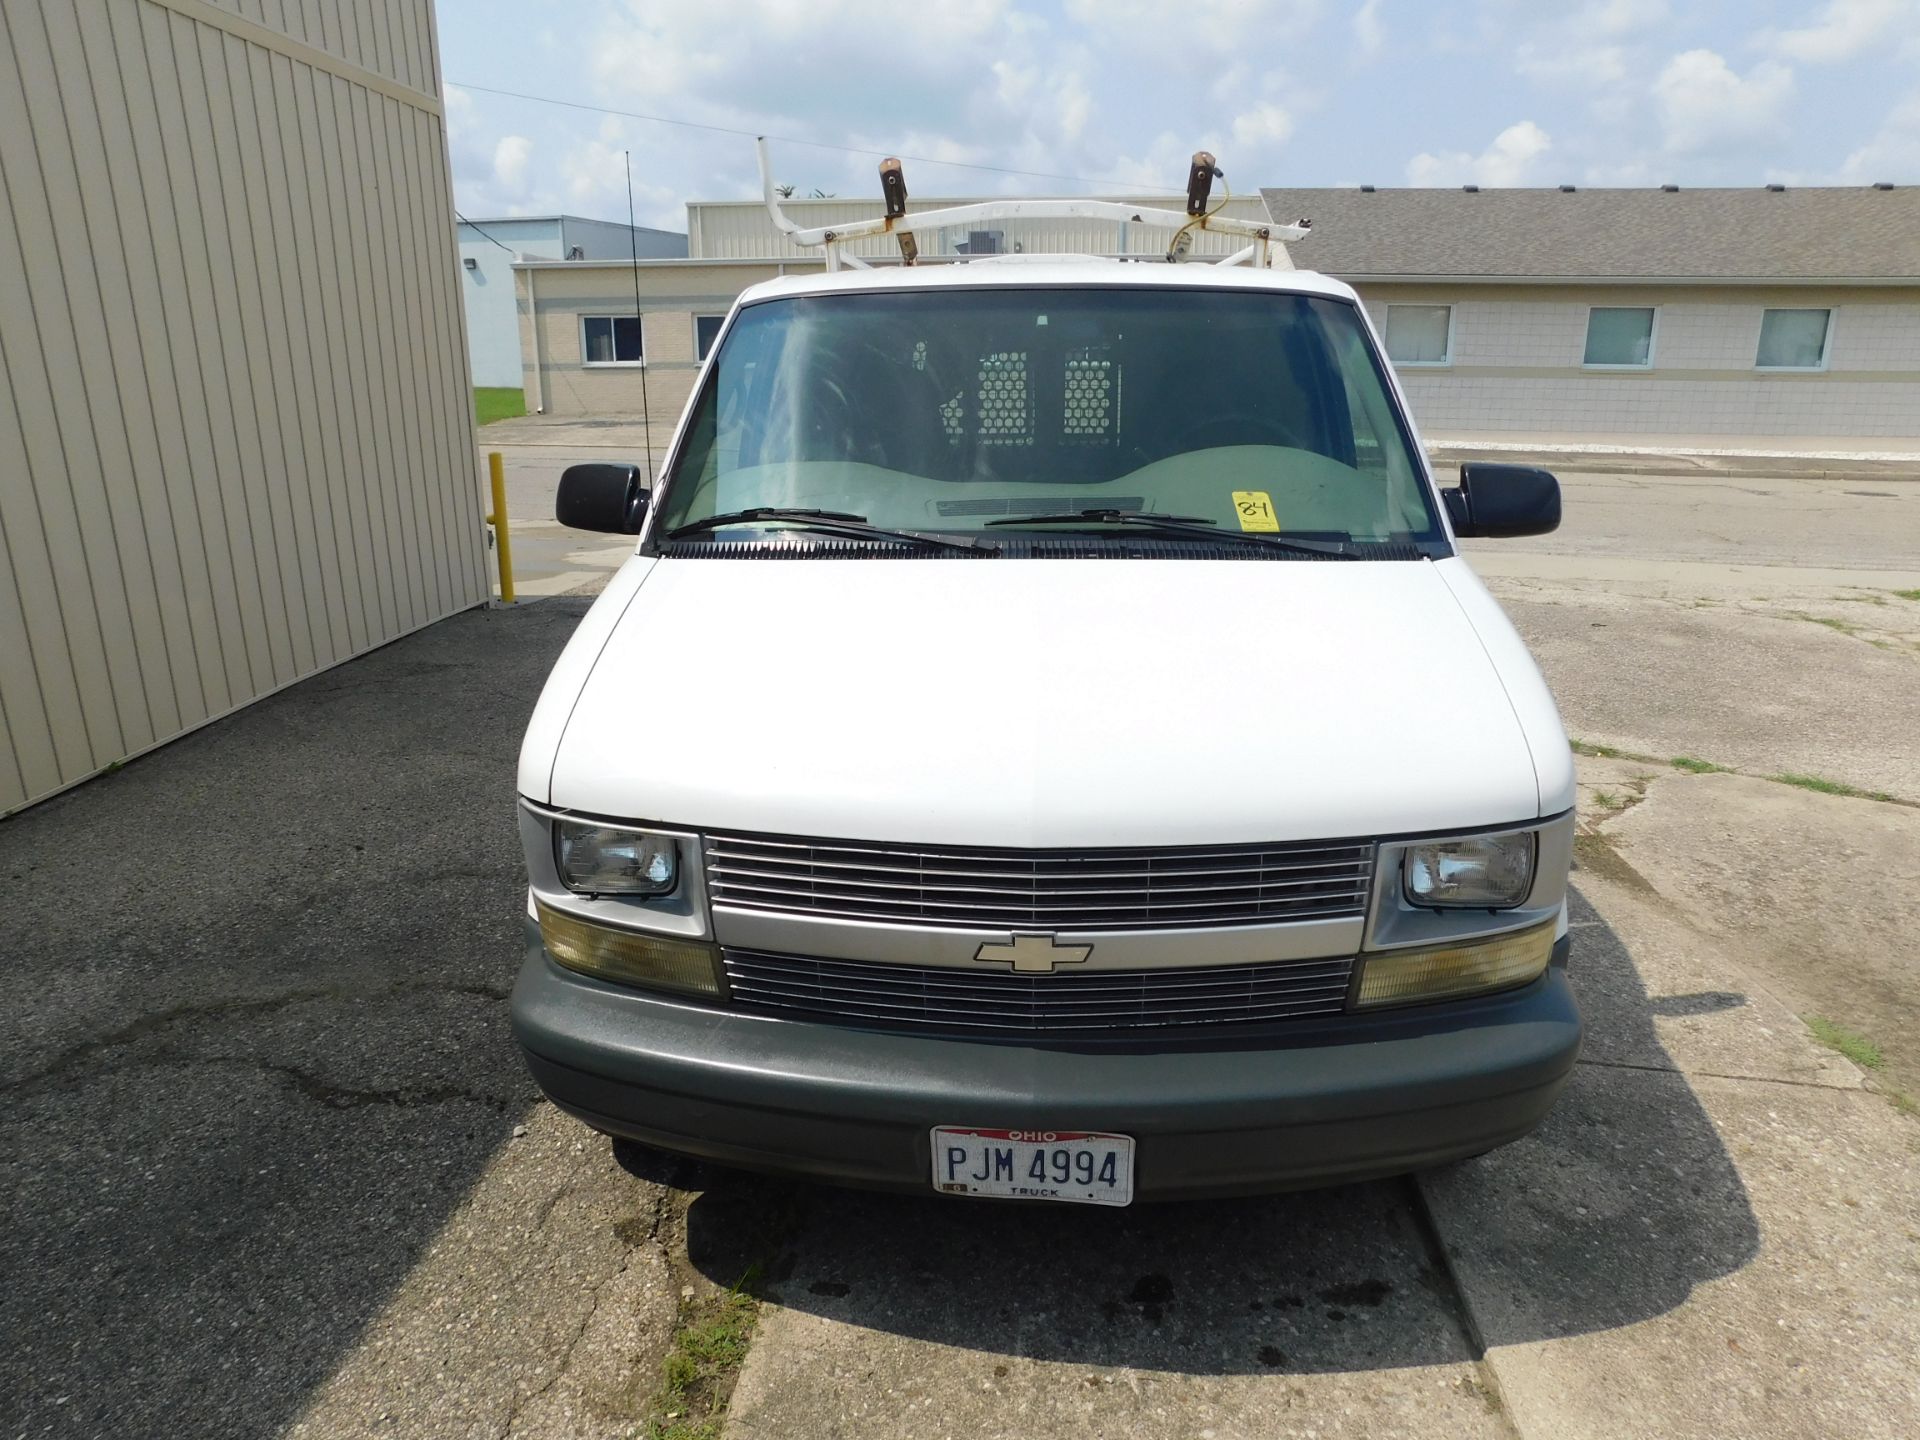 2000 Chevrolet Astro Van, approx, 175,000 miles - Image 4 of 10